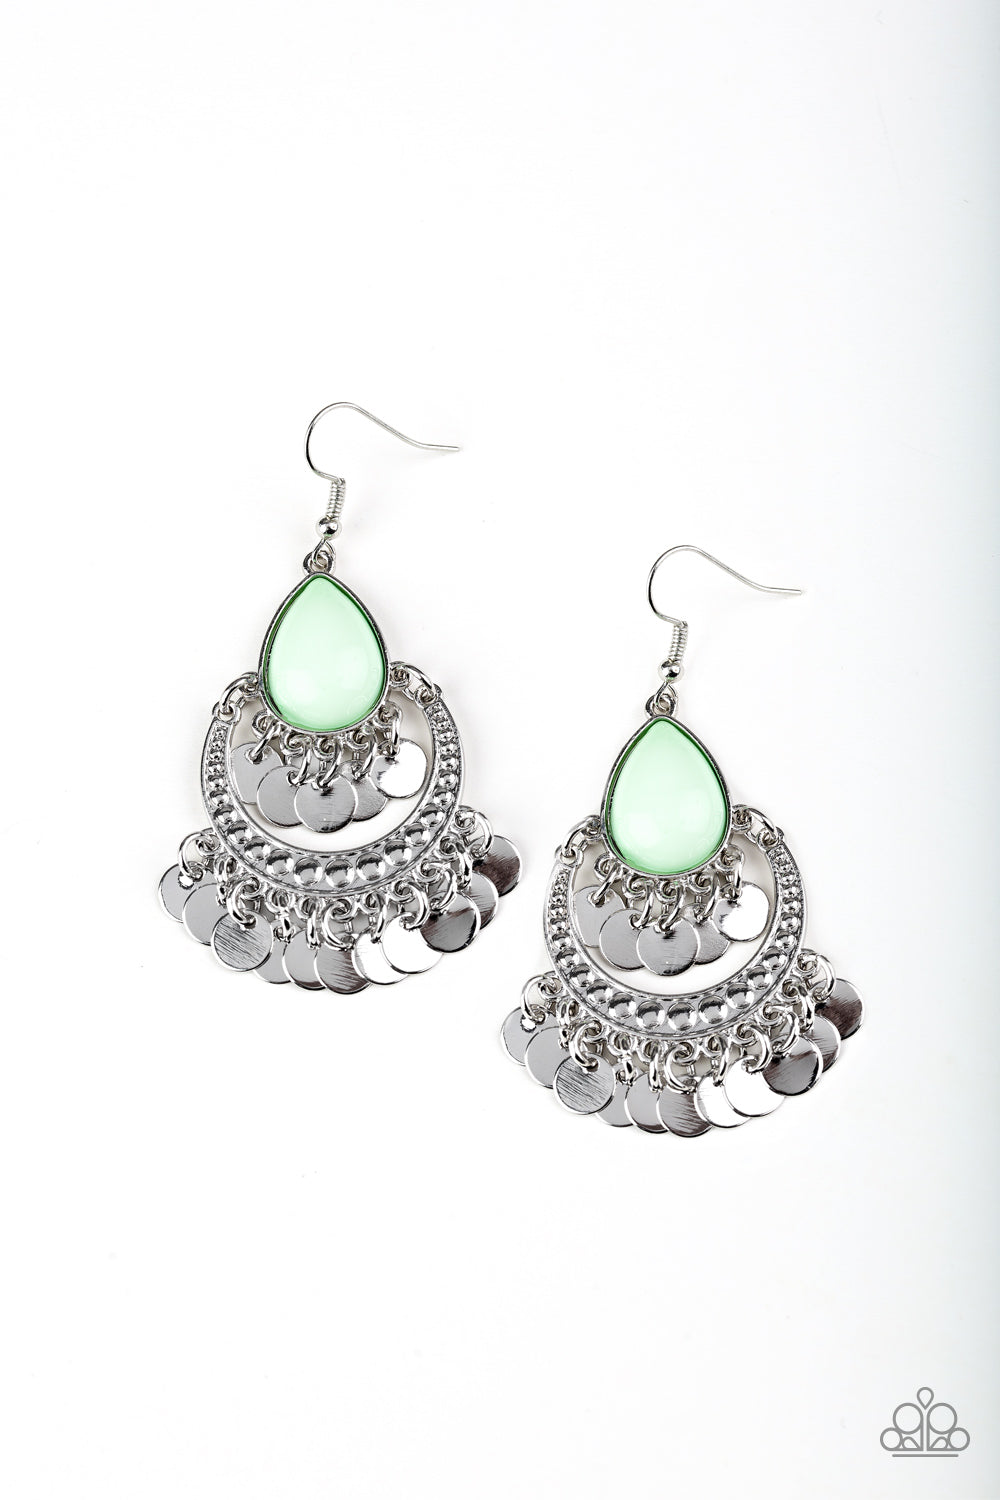 Paparazzi Bodaciously Boho - Green Bead - Silver Earrings - $5 Jewelry With Ashley Swint